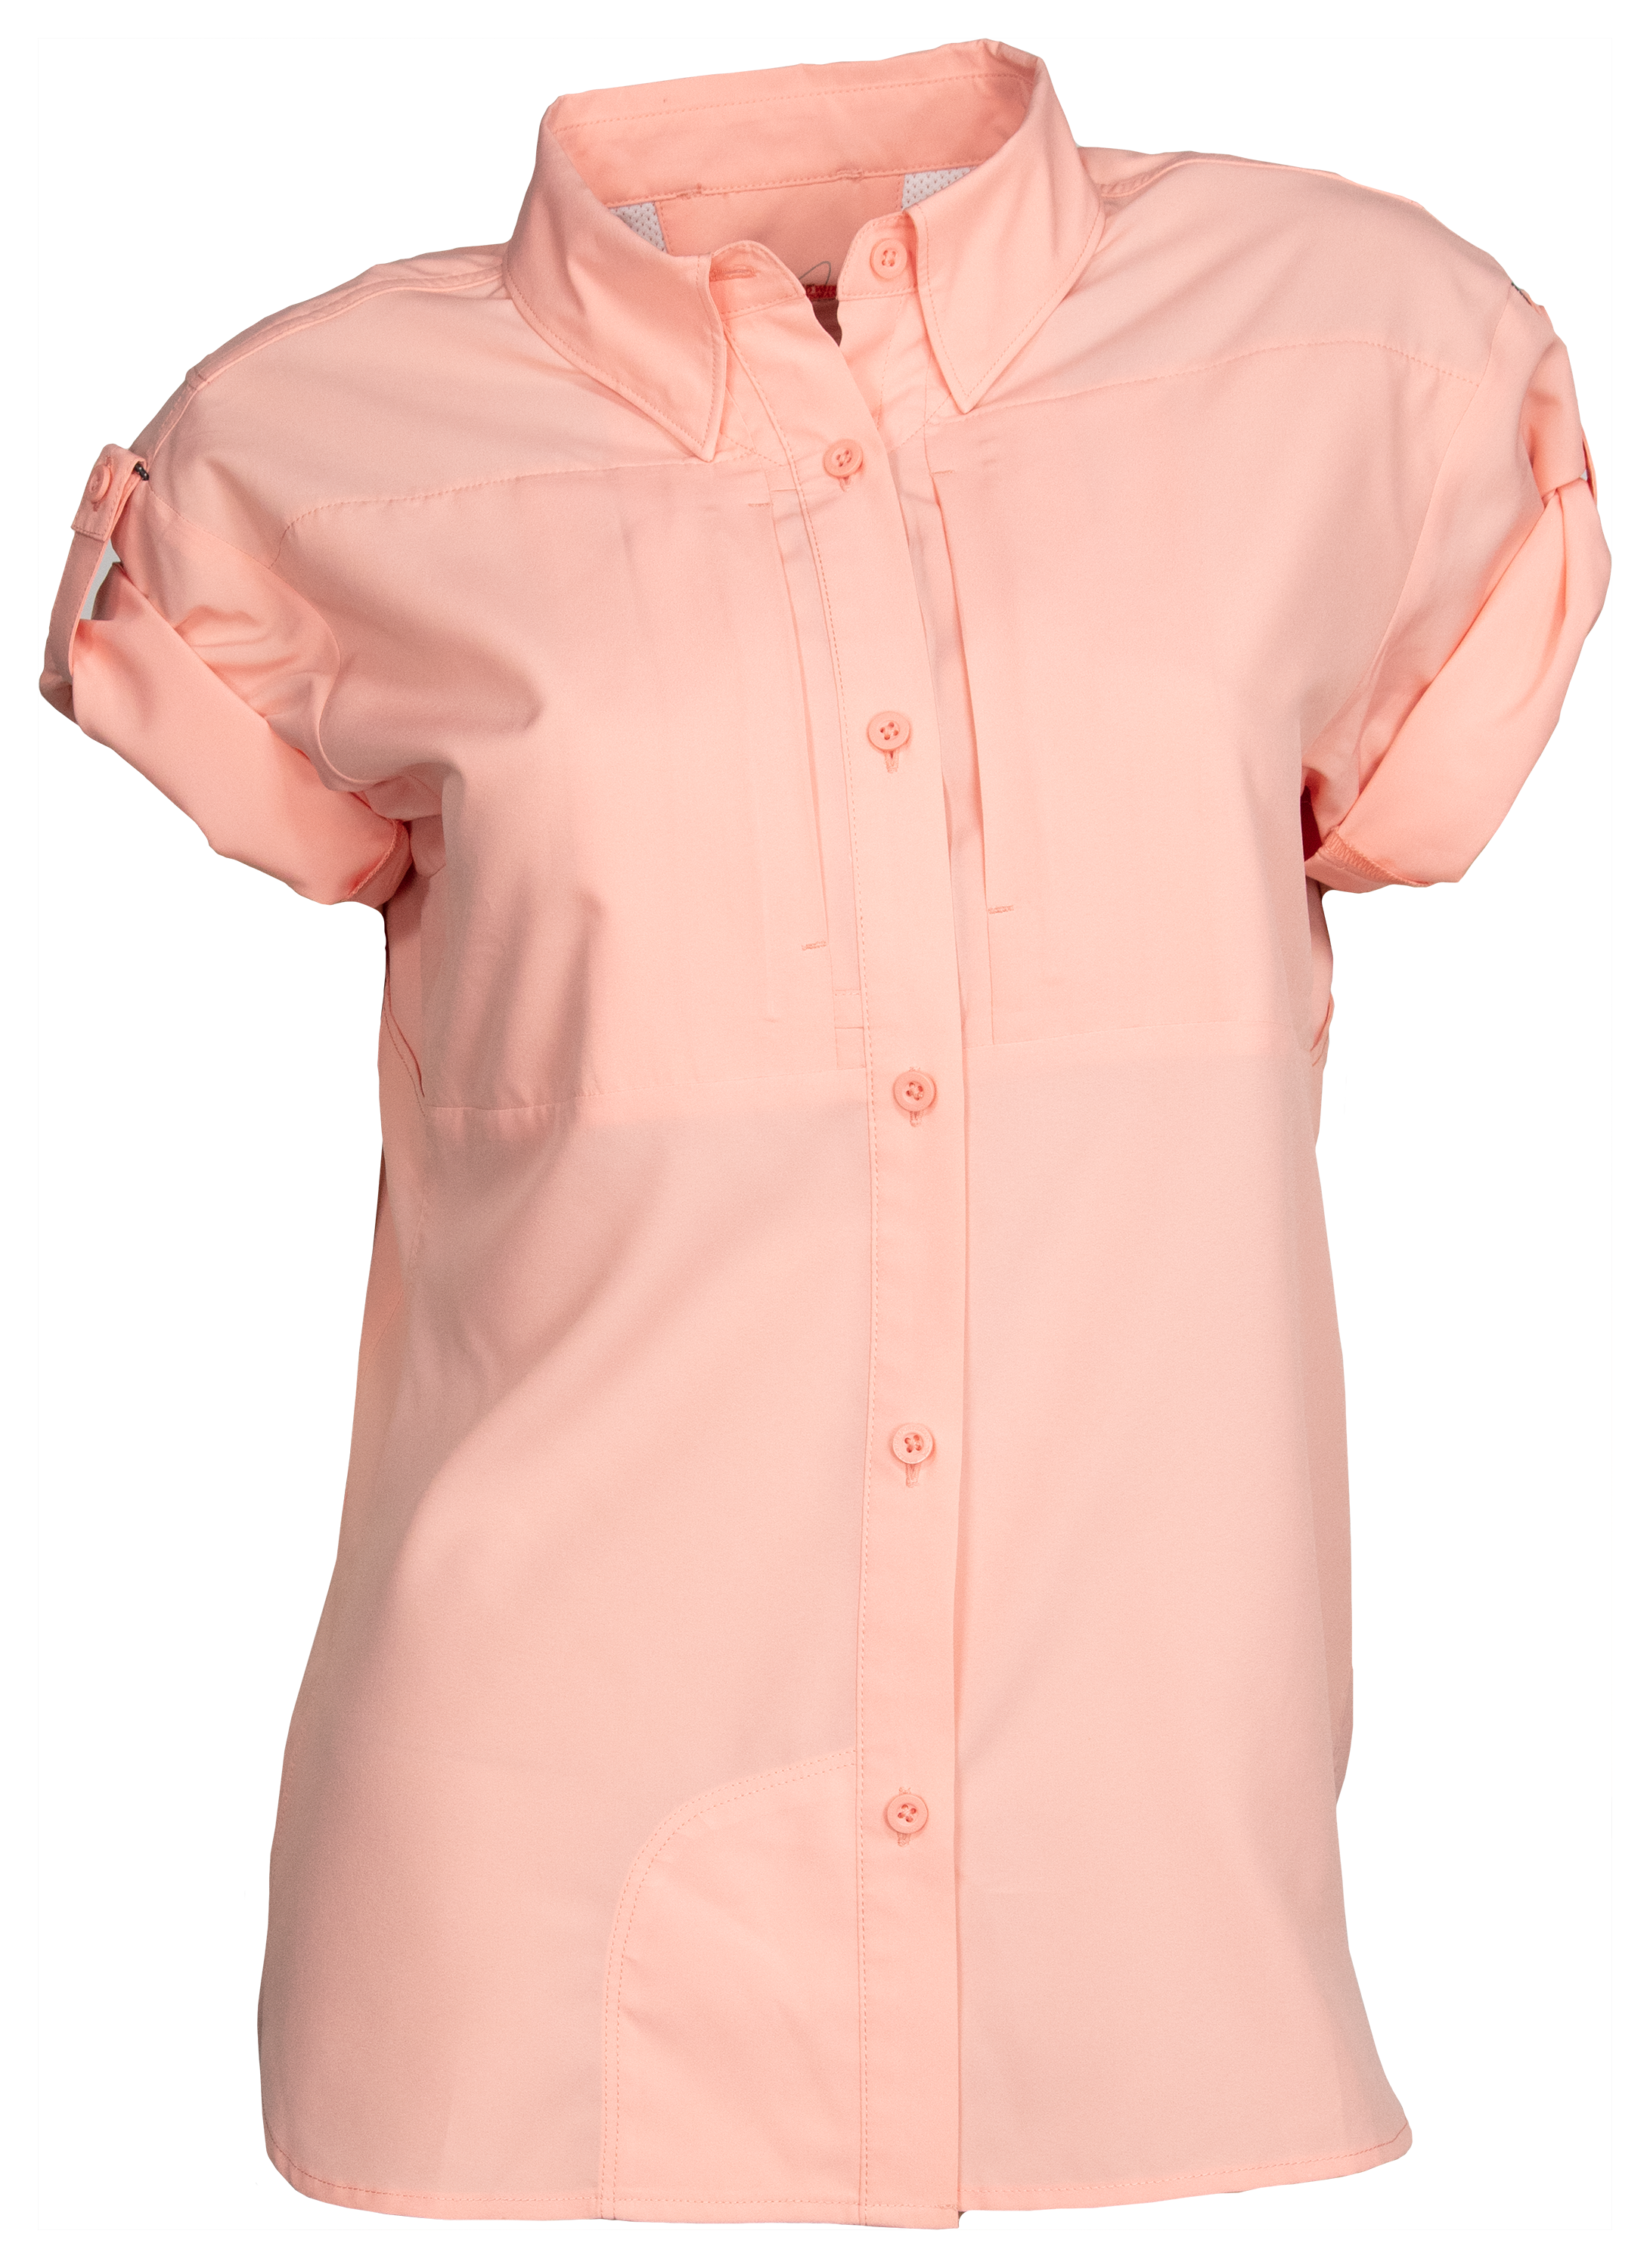 World Wide Sportsman Marina Button-Up Short-Sleeve Shirt for Ladies - Candle Light Peach - XXL